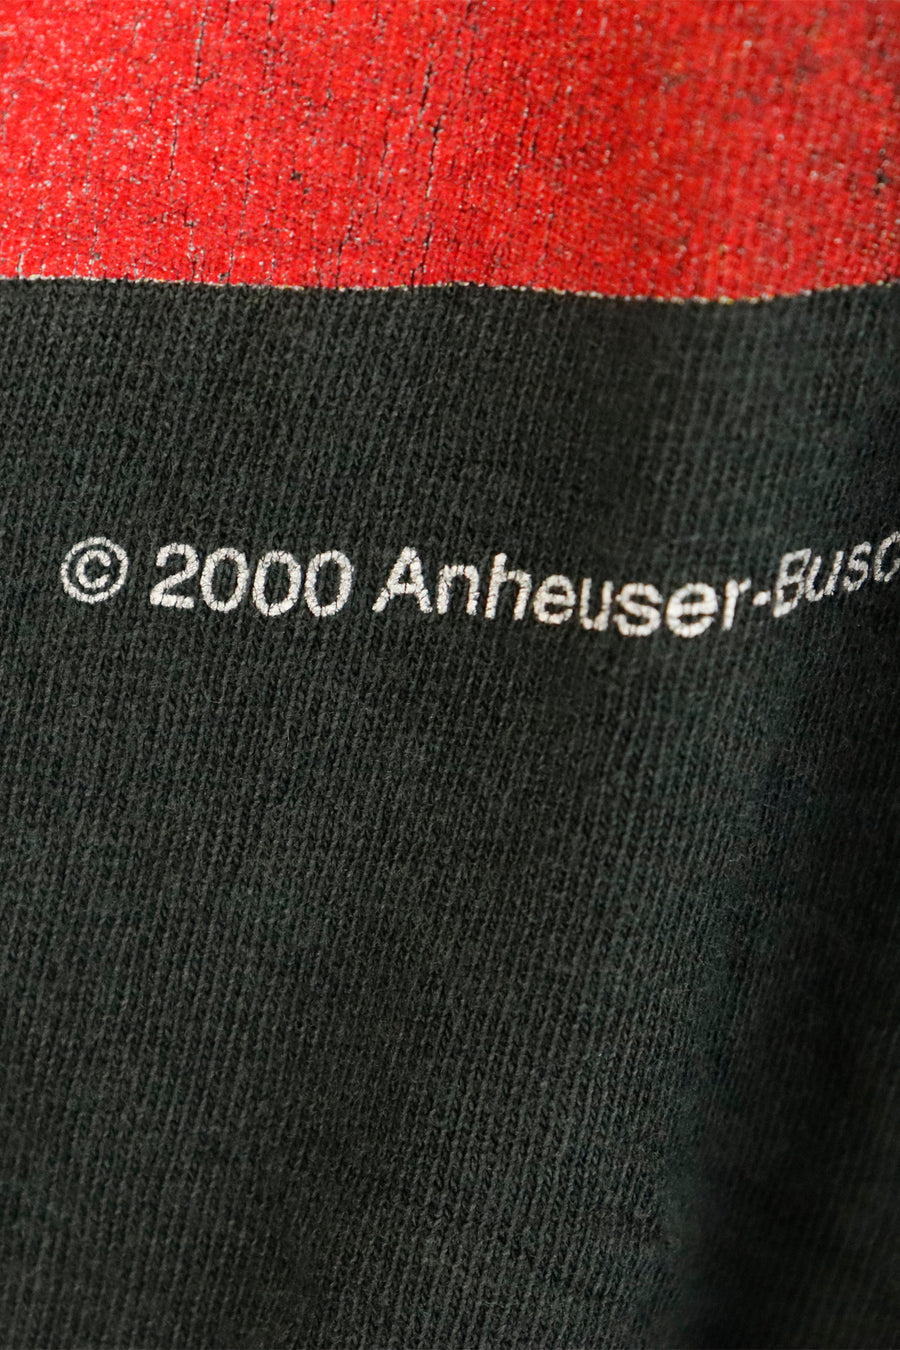 Vintage 2000 Nascar Dale Earnhardt Jr 8 Budweiser Sponsor Vinyl T Shirt Sz XL